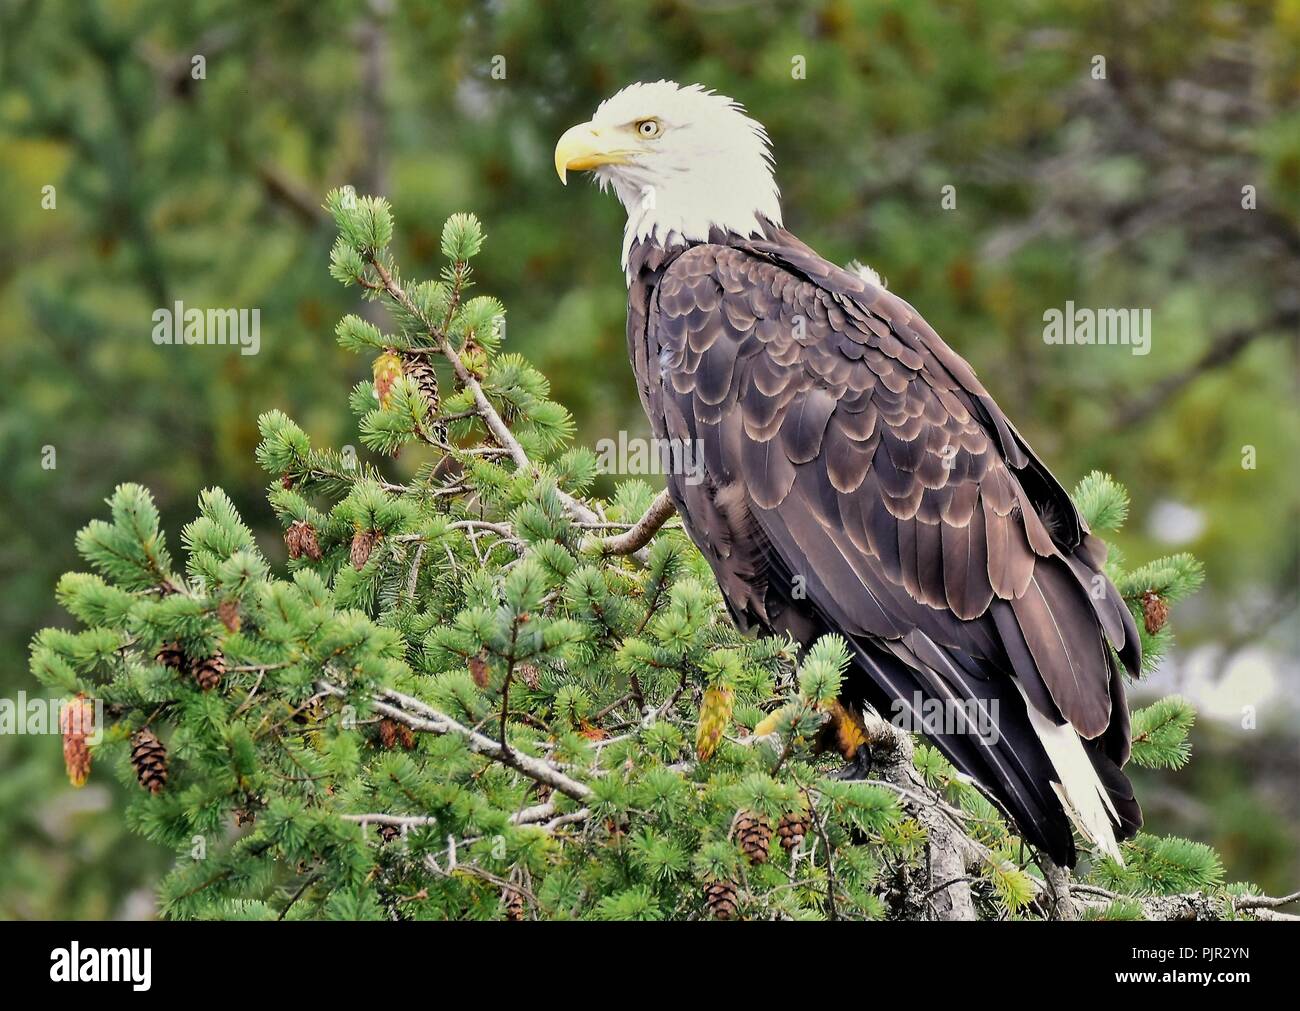 Adult Bald headed eagle at Quadra Island, off Vancouver Island, British Columbia, Canada. Stock Photo